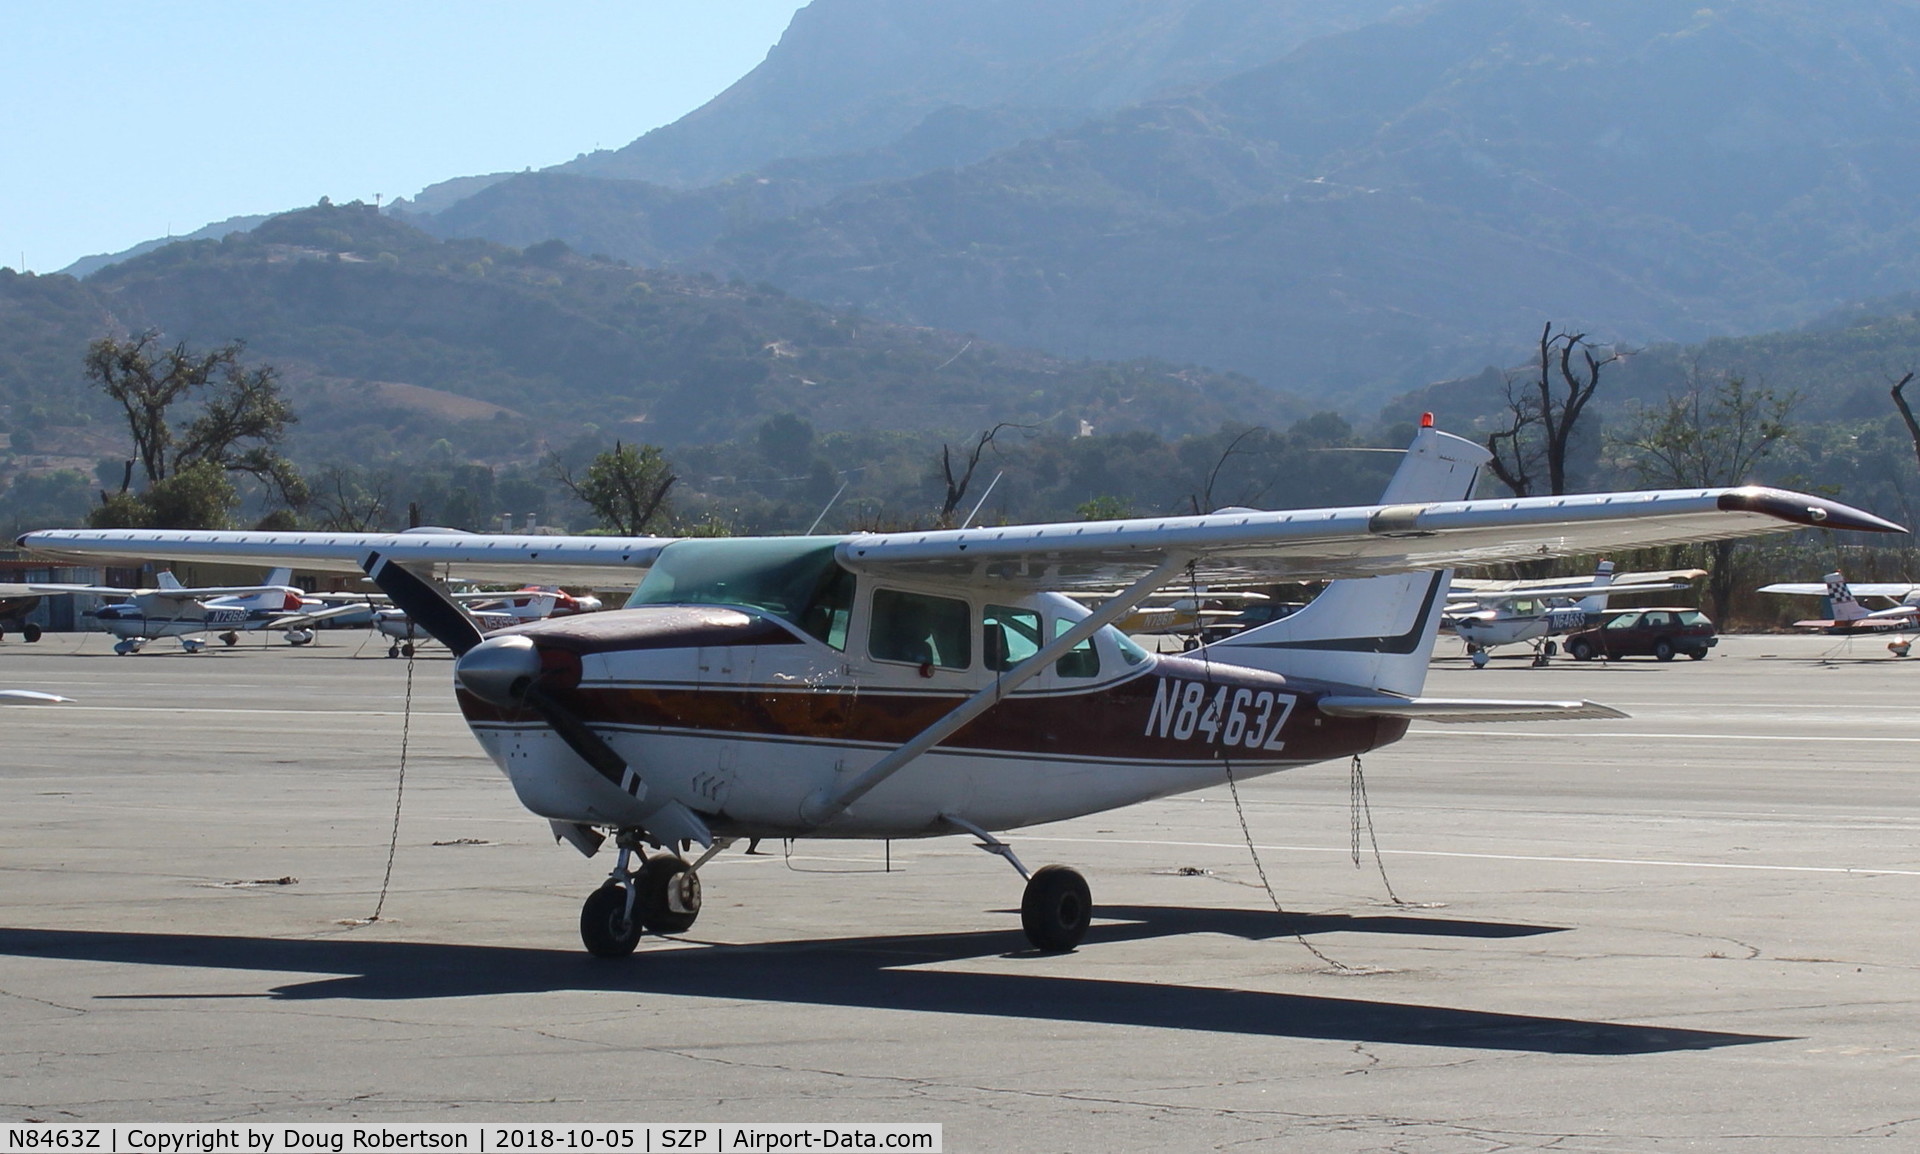 N8463Z, 1963 Cessna 210-5(205) C/N 205-0463, 1963 Cessna 210-5(205) UTILINE (fixed gear version of C210), Continental IO-470E 260 Hp, wing Micro vortex generators mod by STC